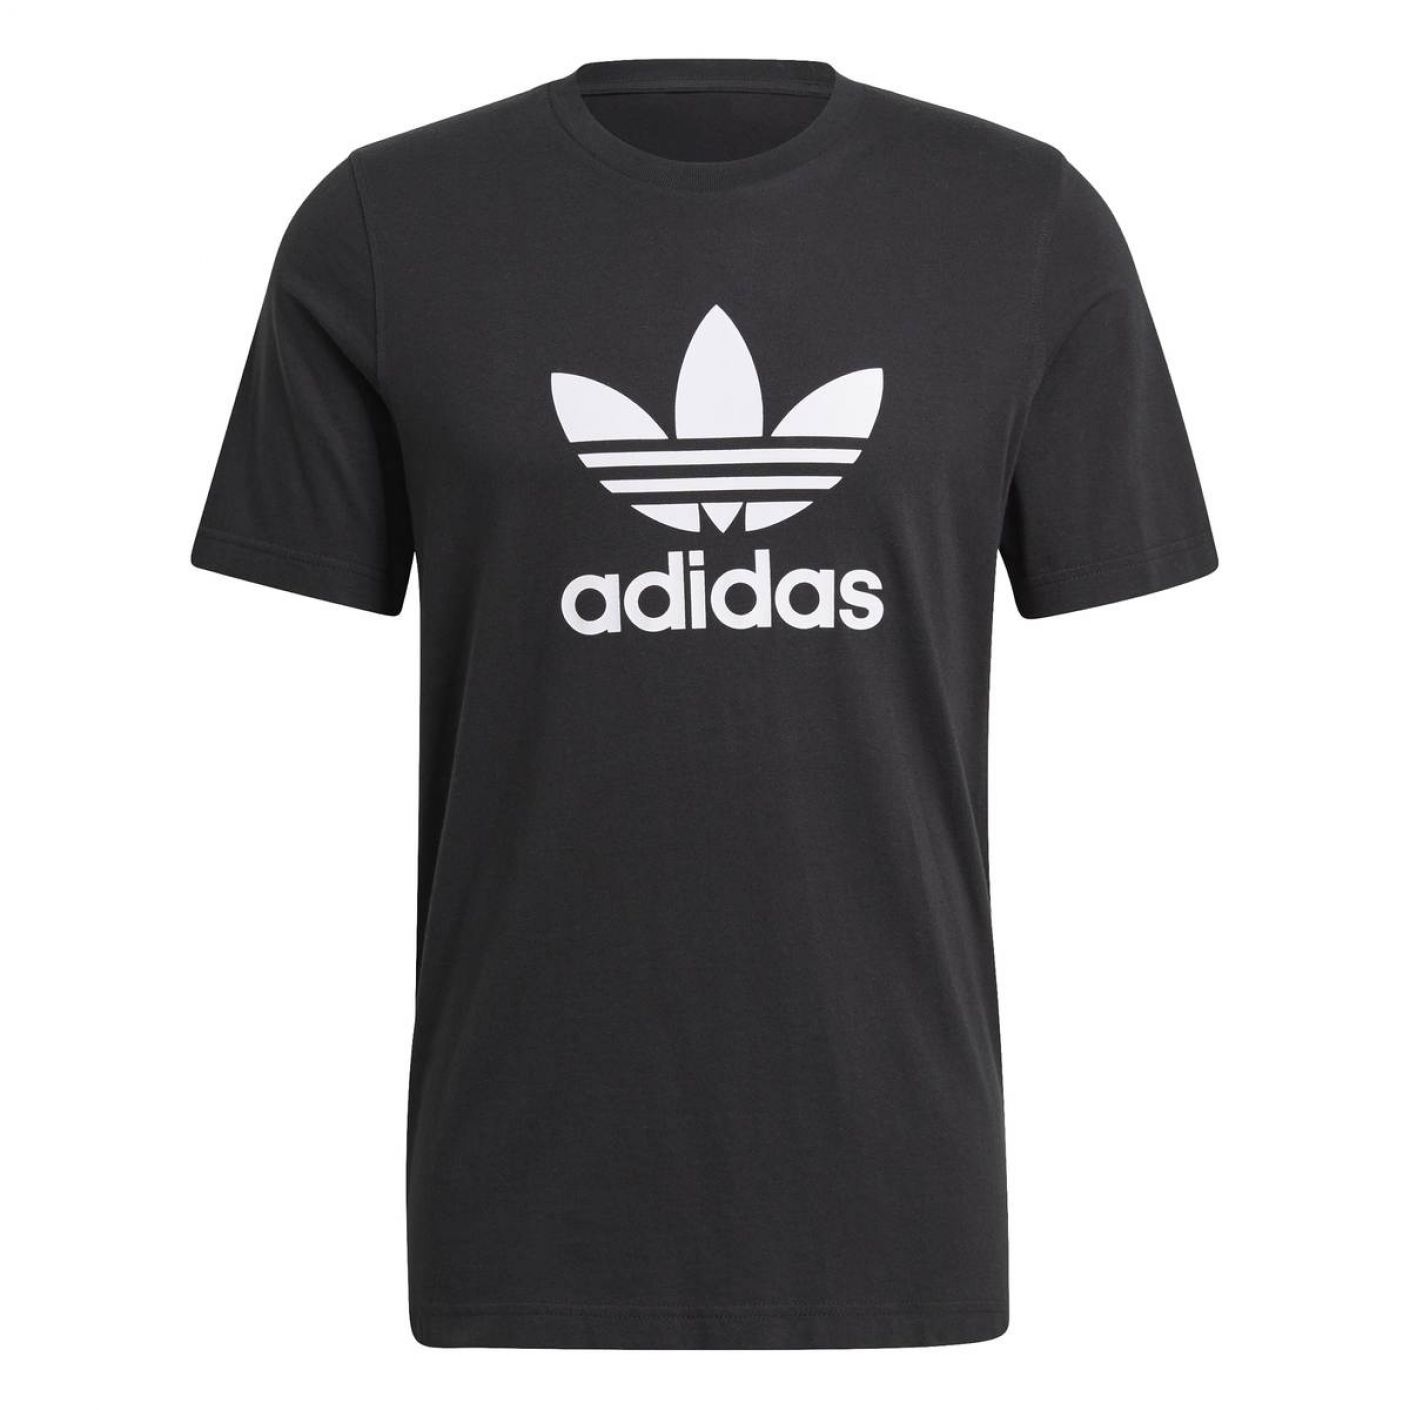 Adidas Trefoil T-Shirt Black